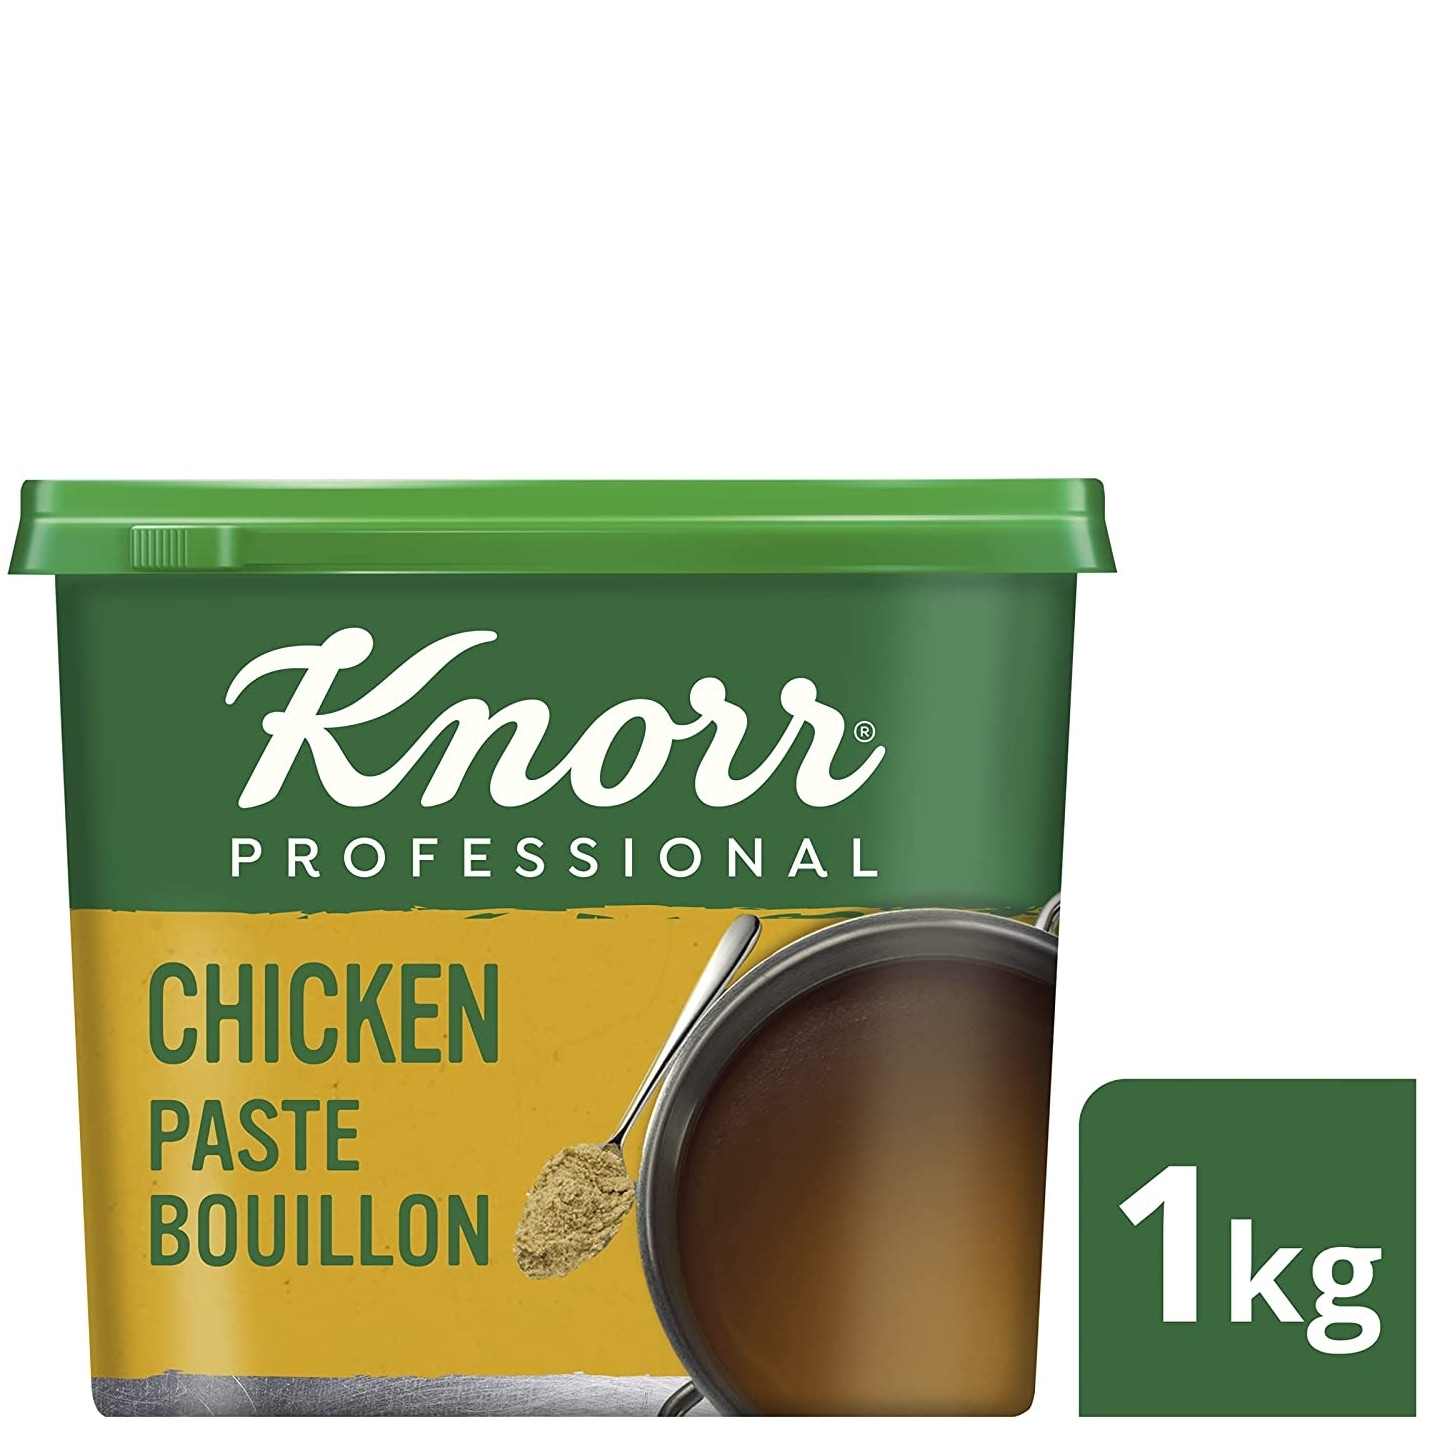 Knorr Professional Gluten Free Chicken Paste Bouillon 1kg - 